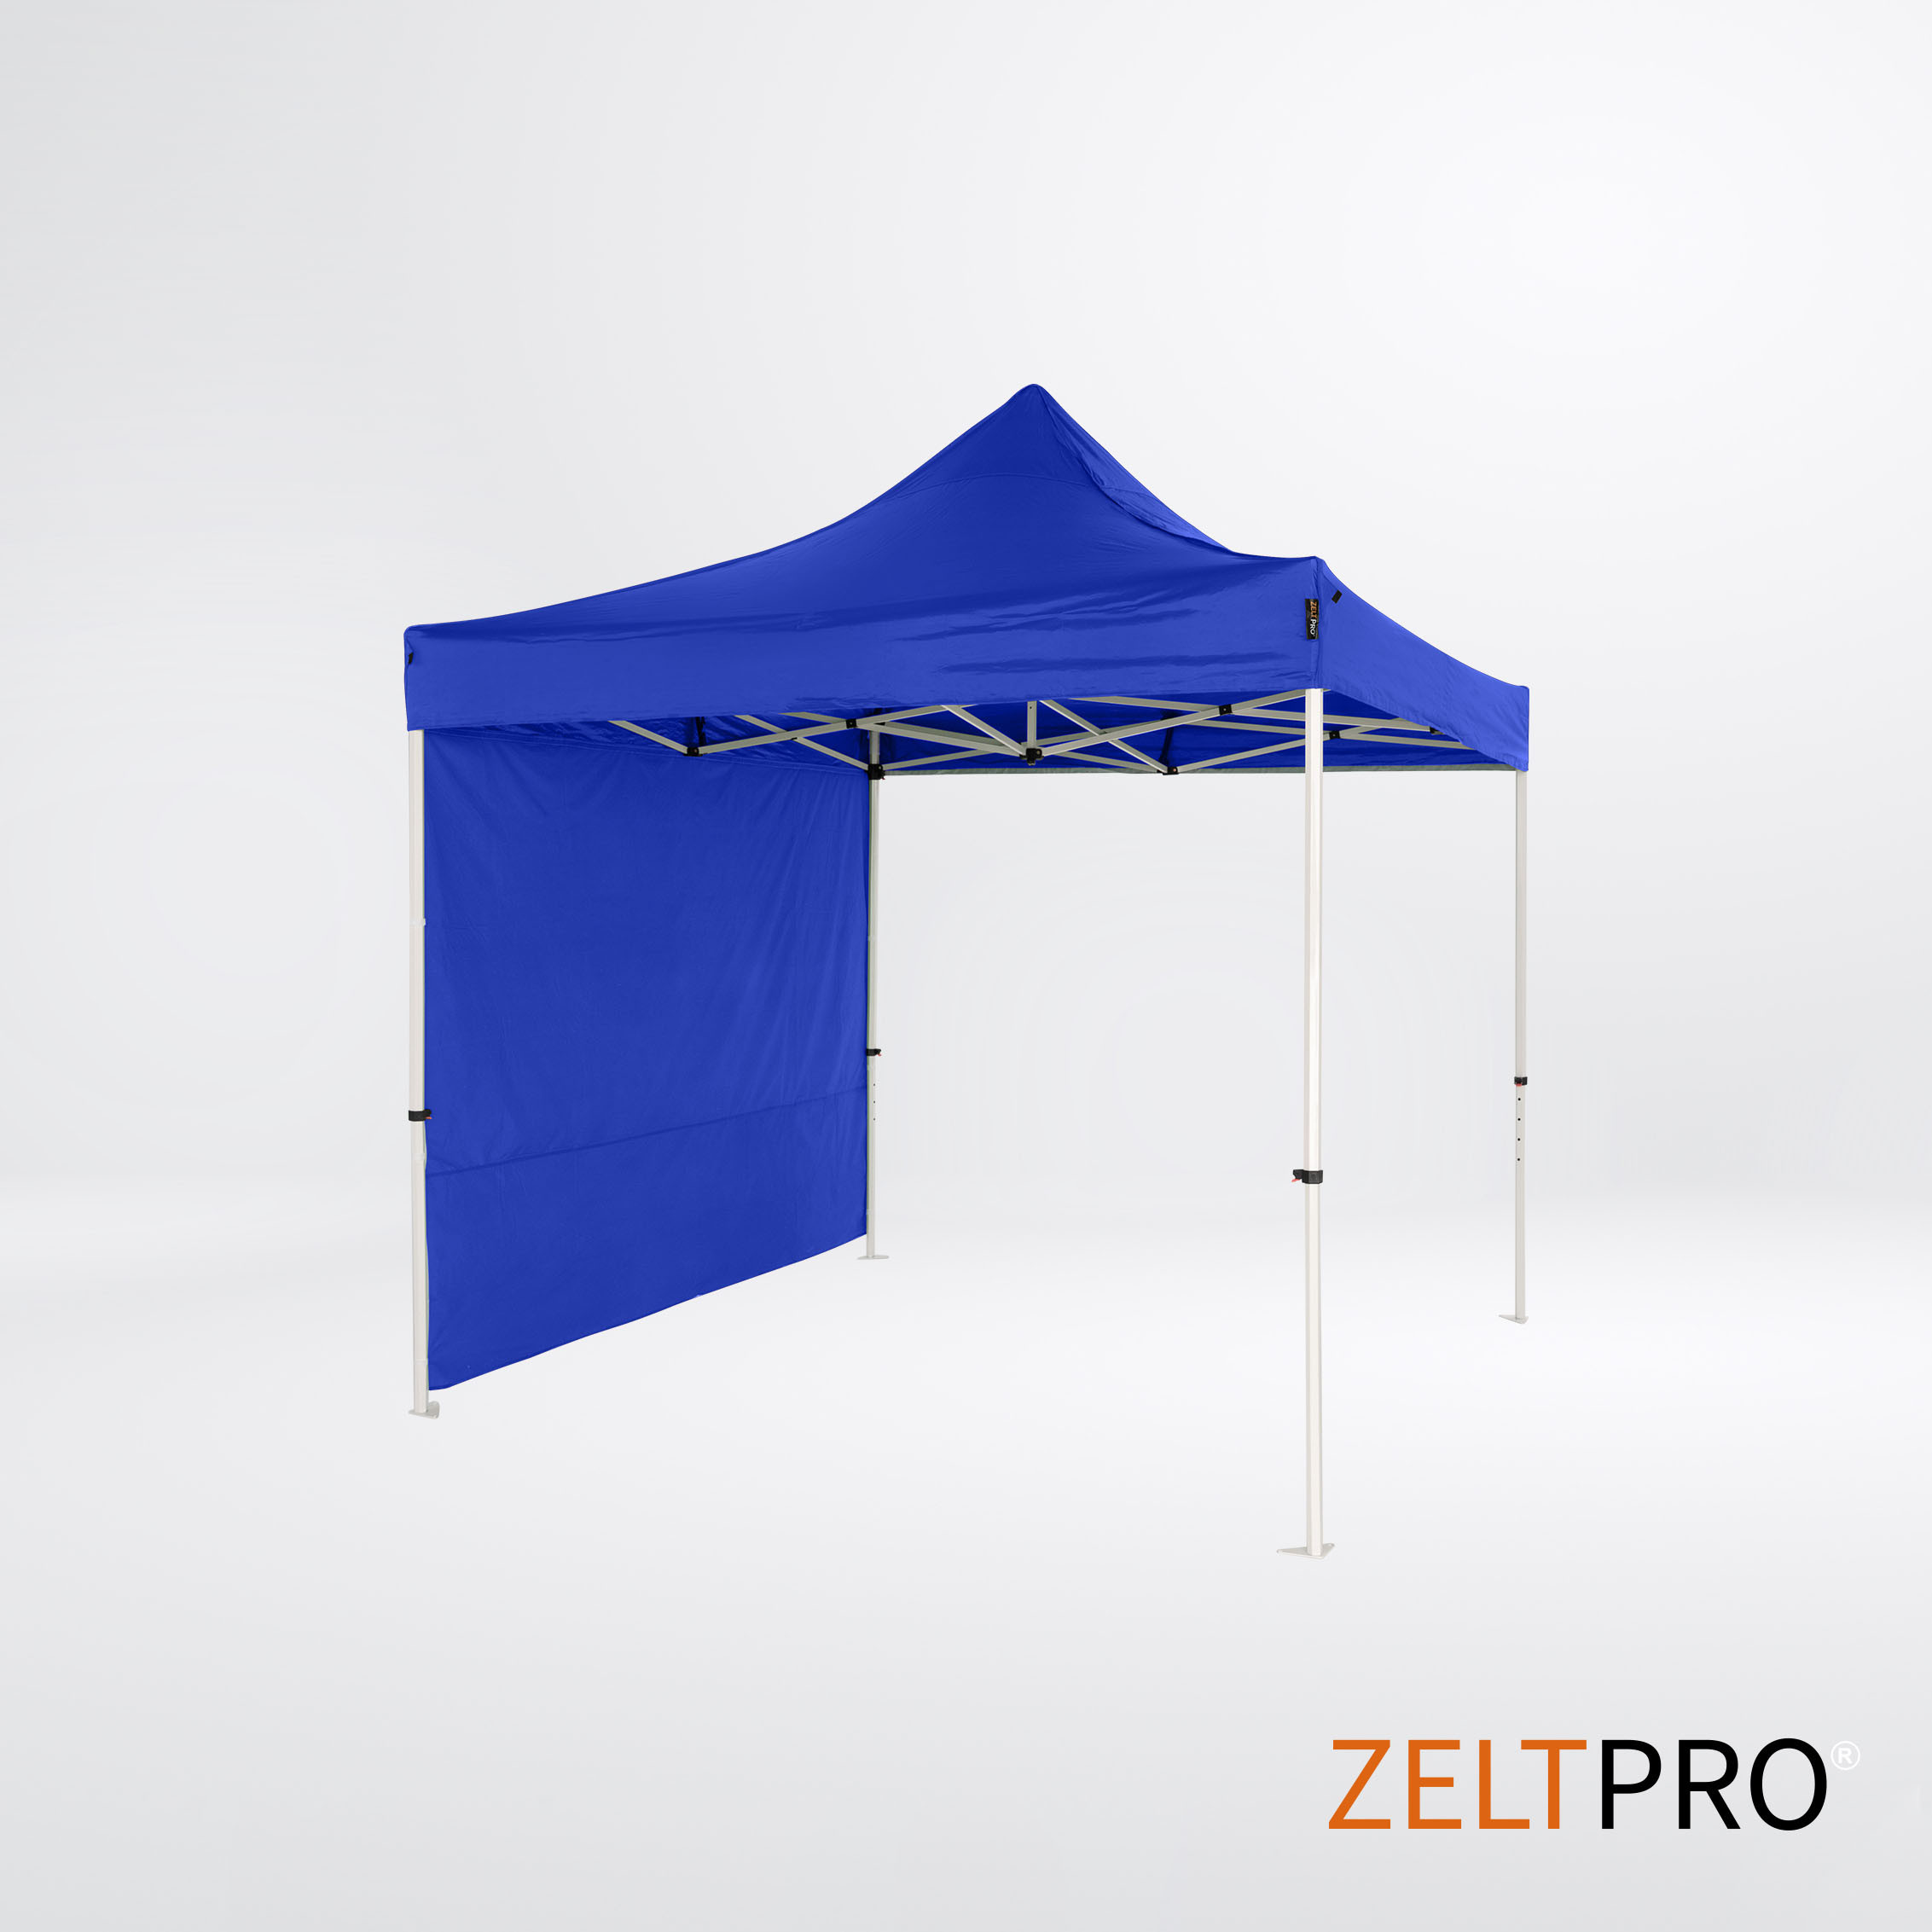 Pop-up telk 3x3 sinine Zeltpro PROFRAME